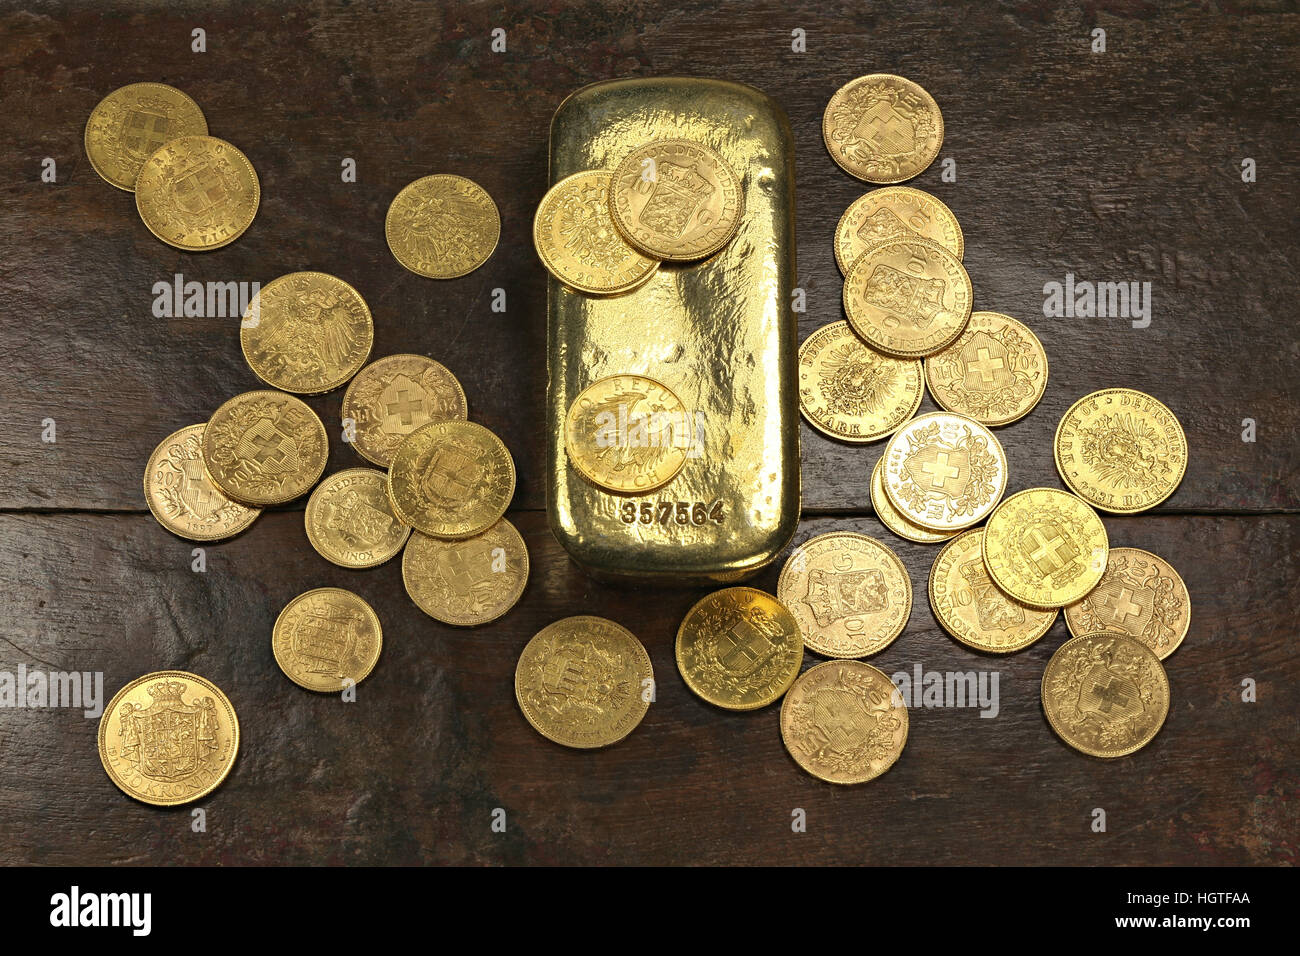 Diamonds and gold bars Stock Photo - Alamy